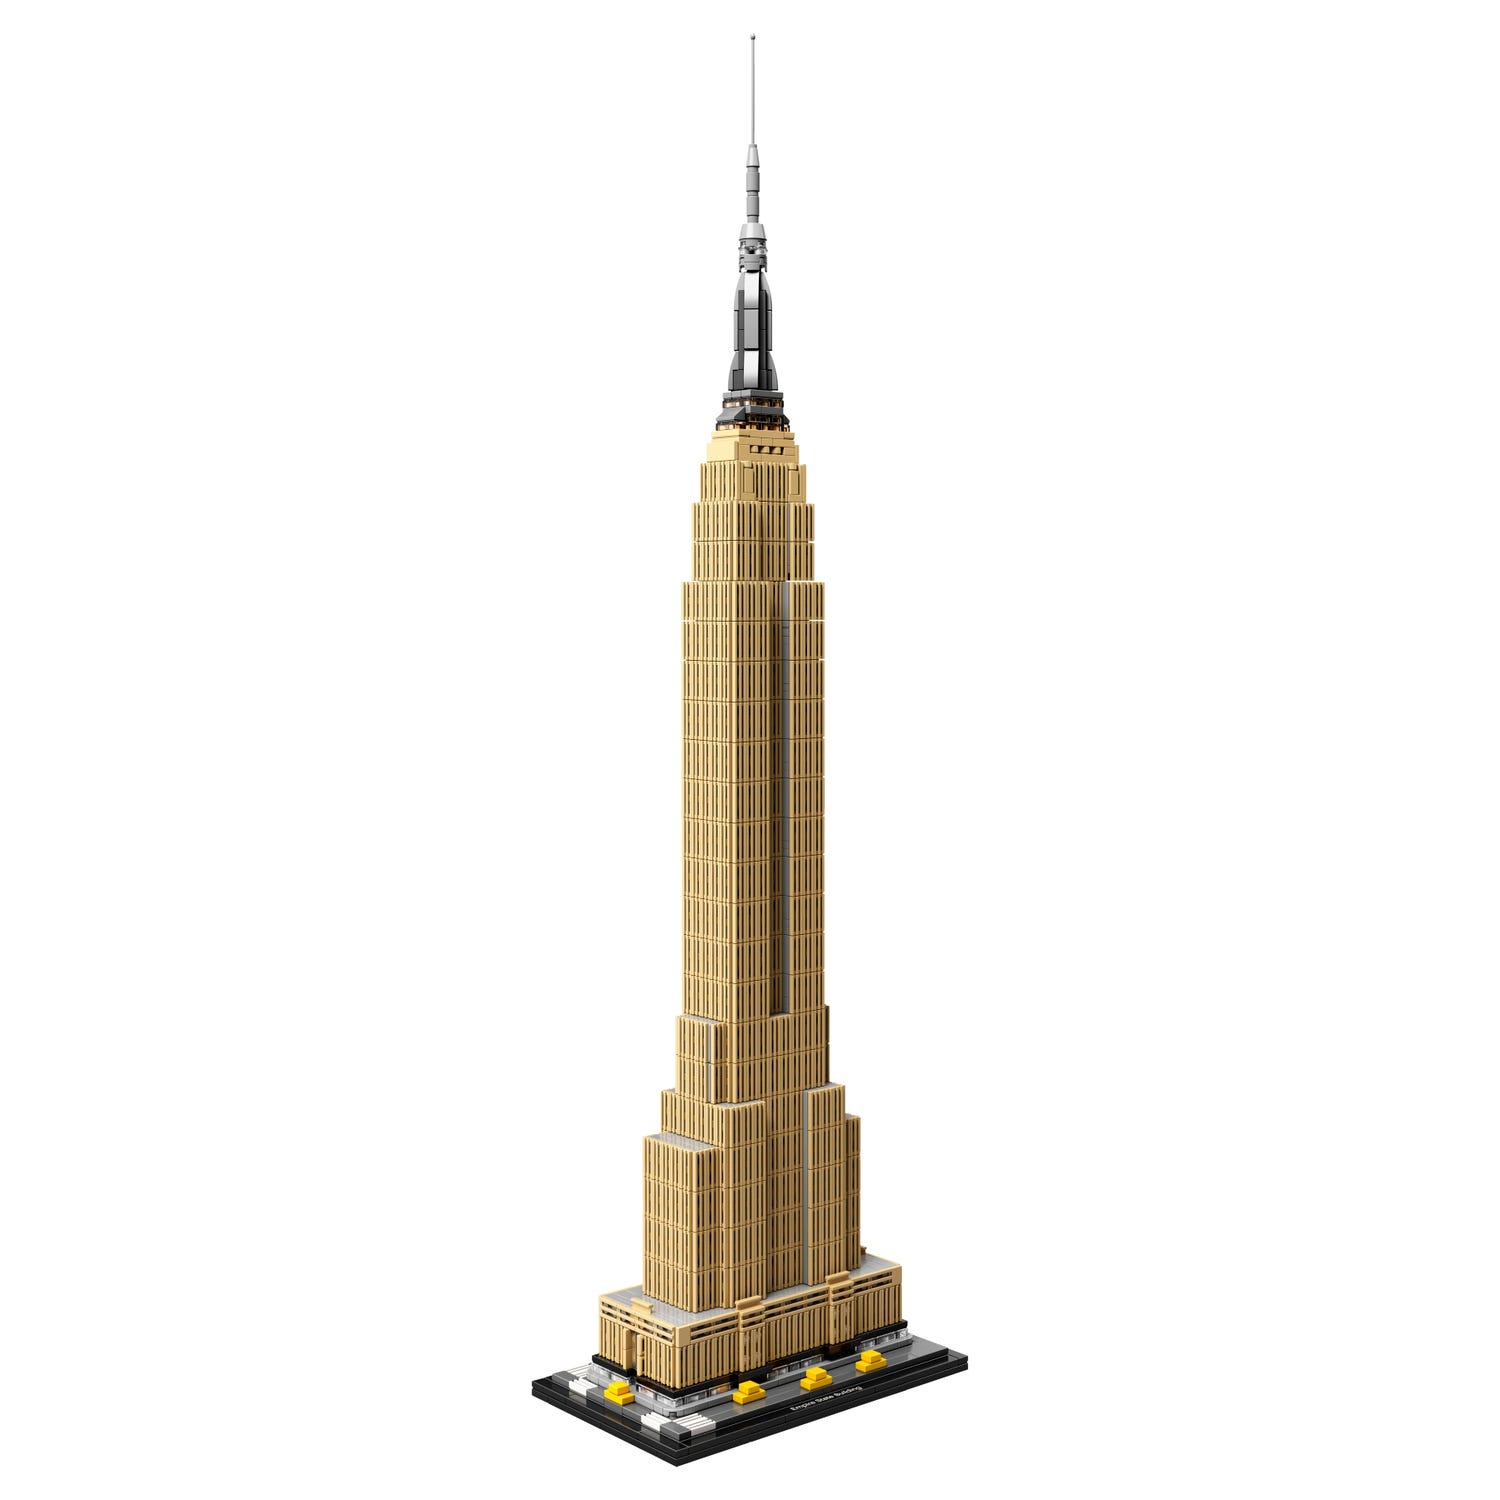 Milieuvriendelijk bijtend Gelovige Empire State Building 21046 | Architecture | Buy online at the Official LEGO®  Shop US